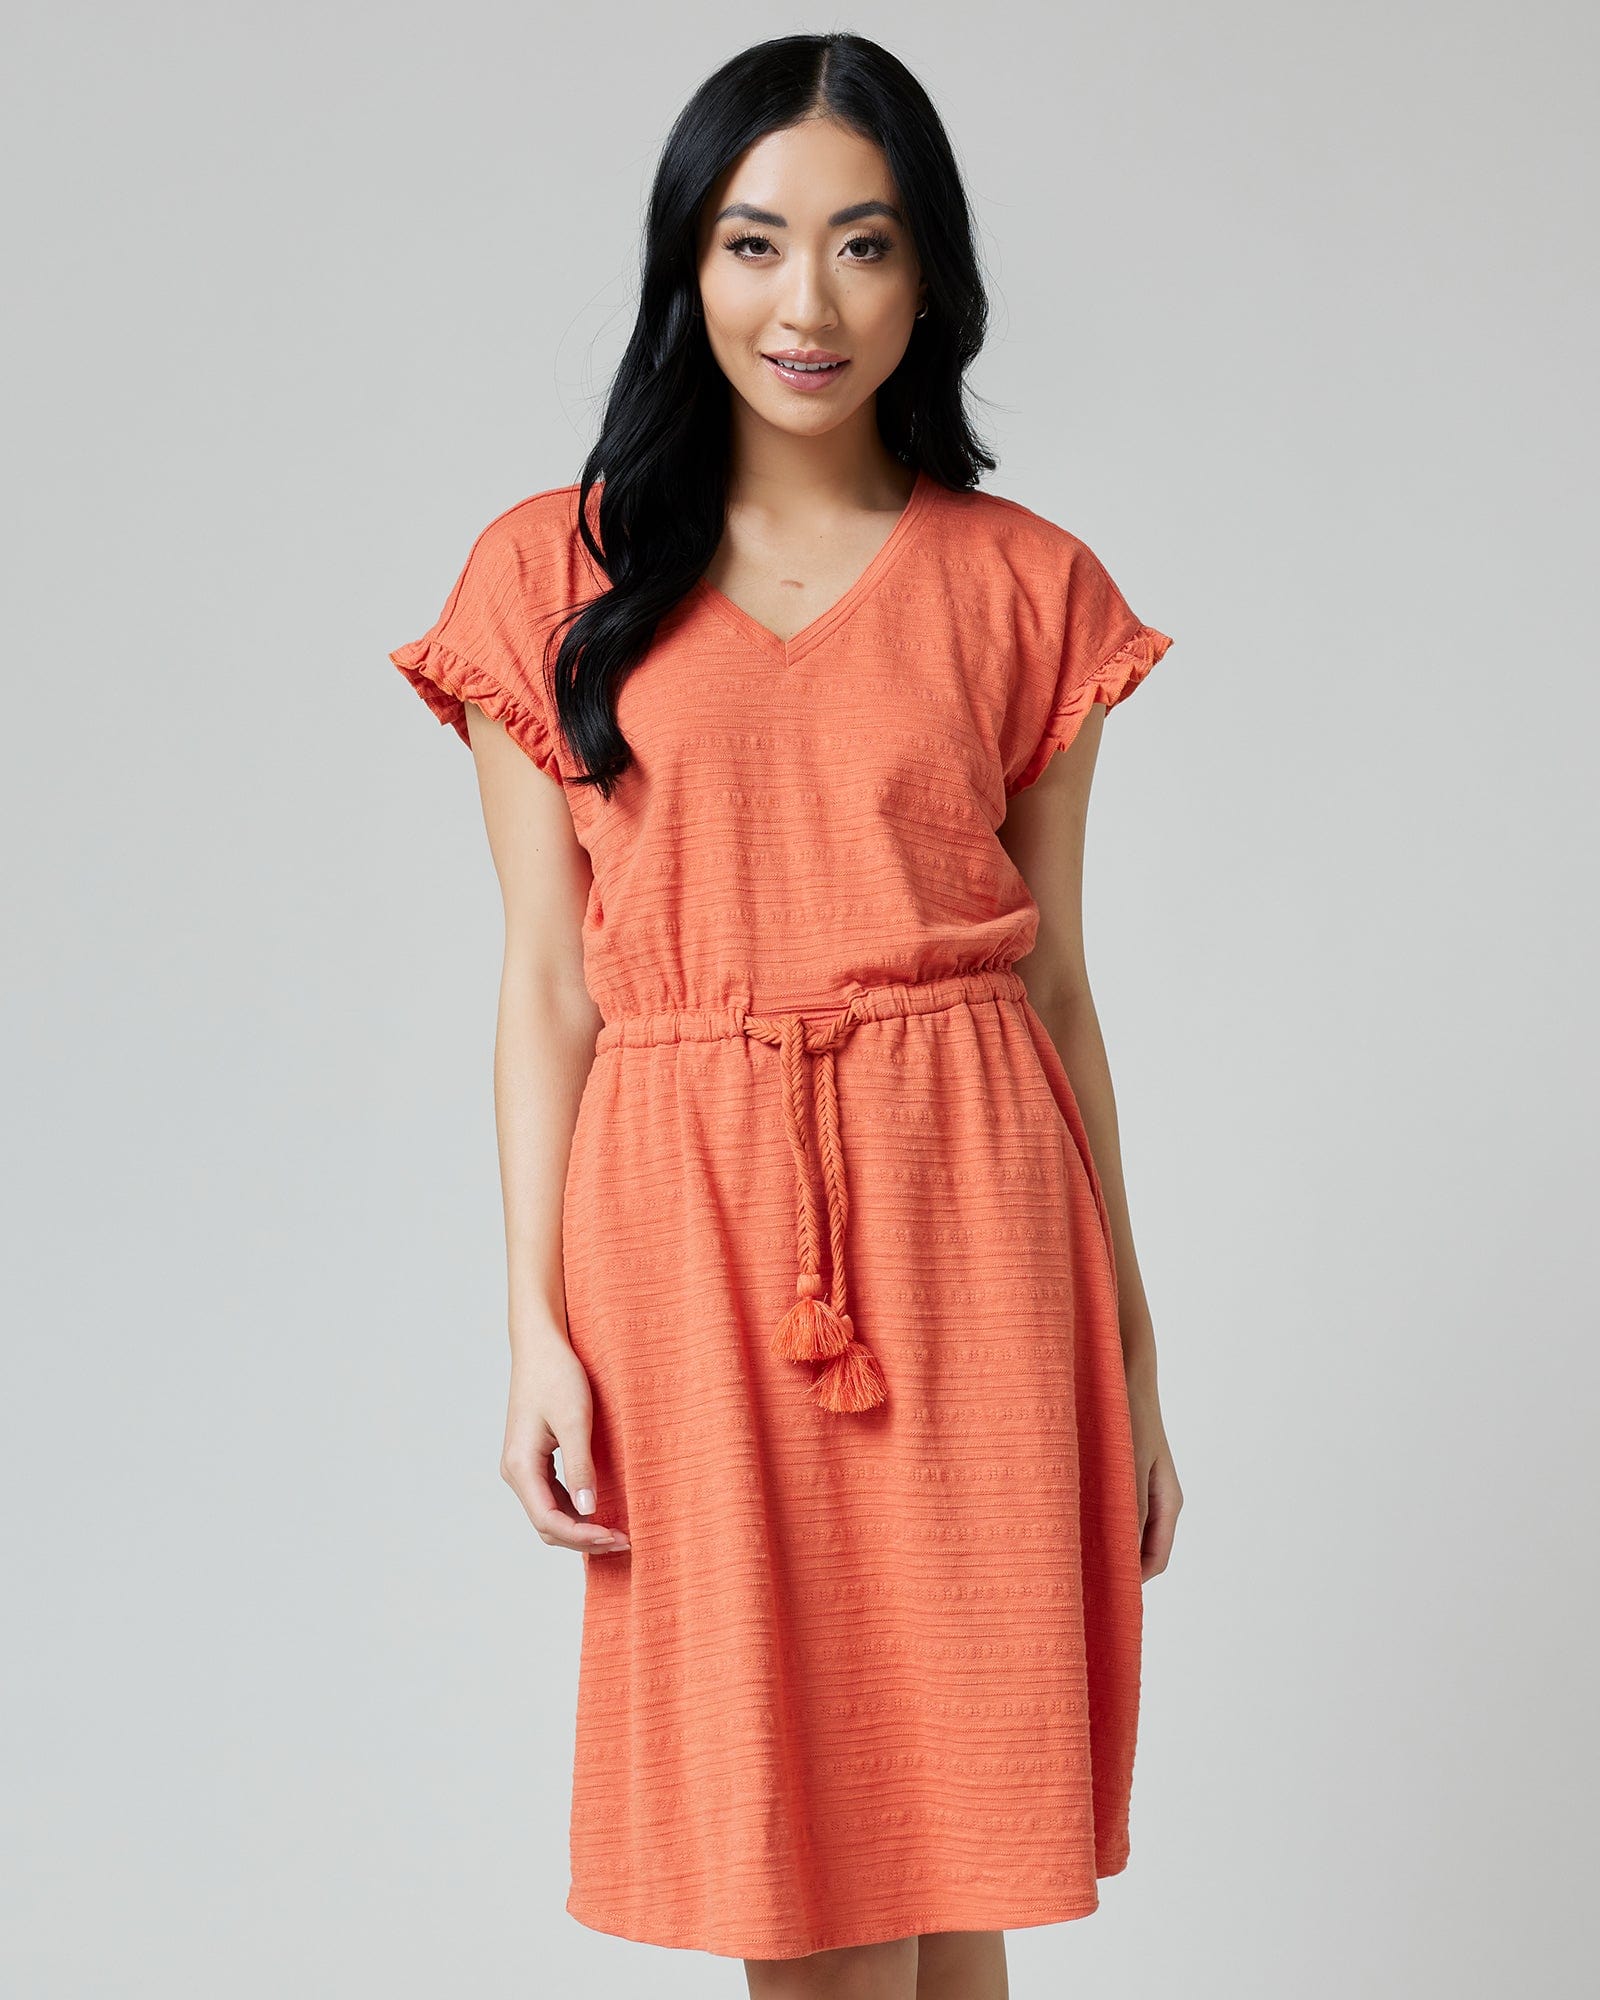 Woman in a short sleeve, v-neck, textured, orange dress